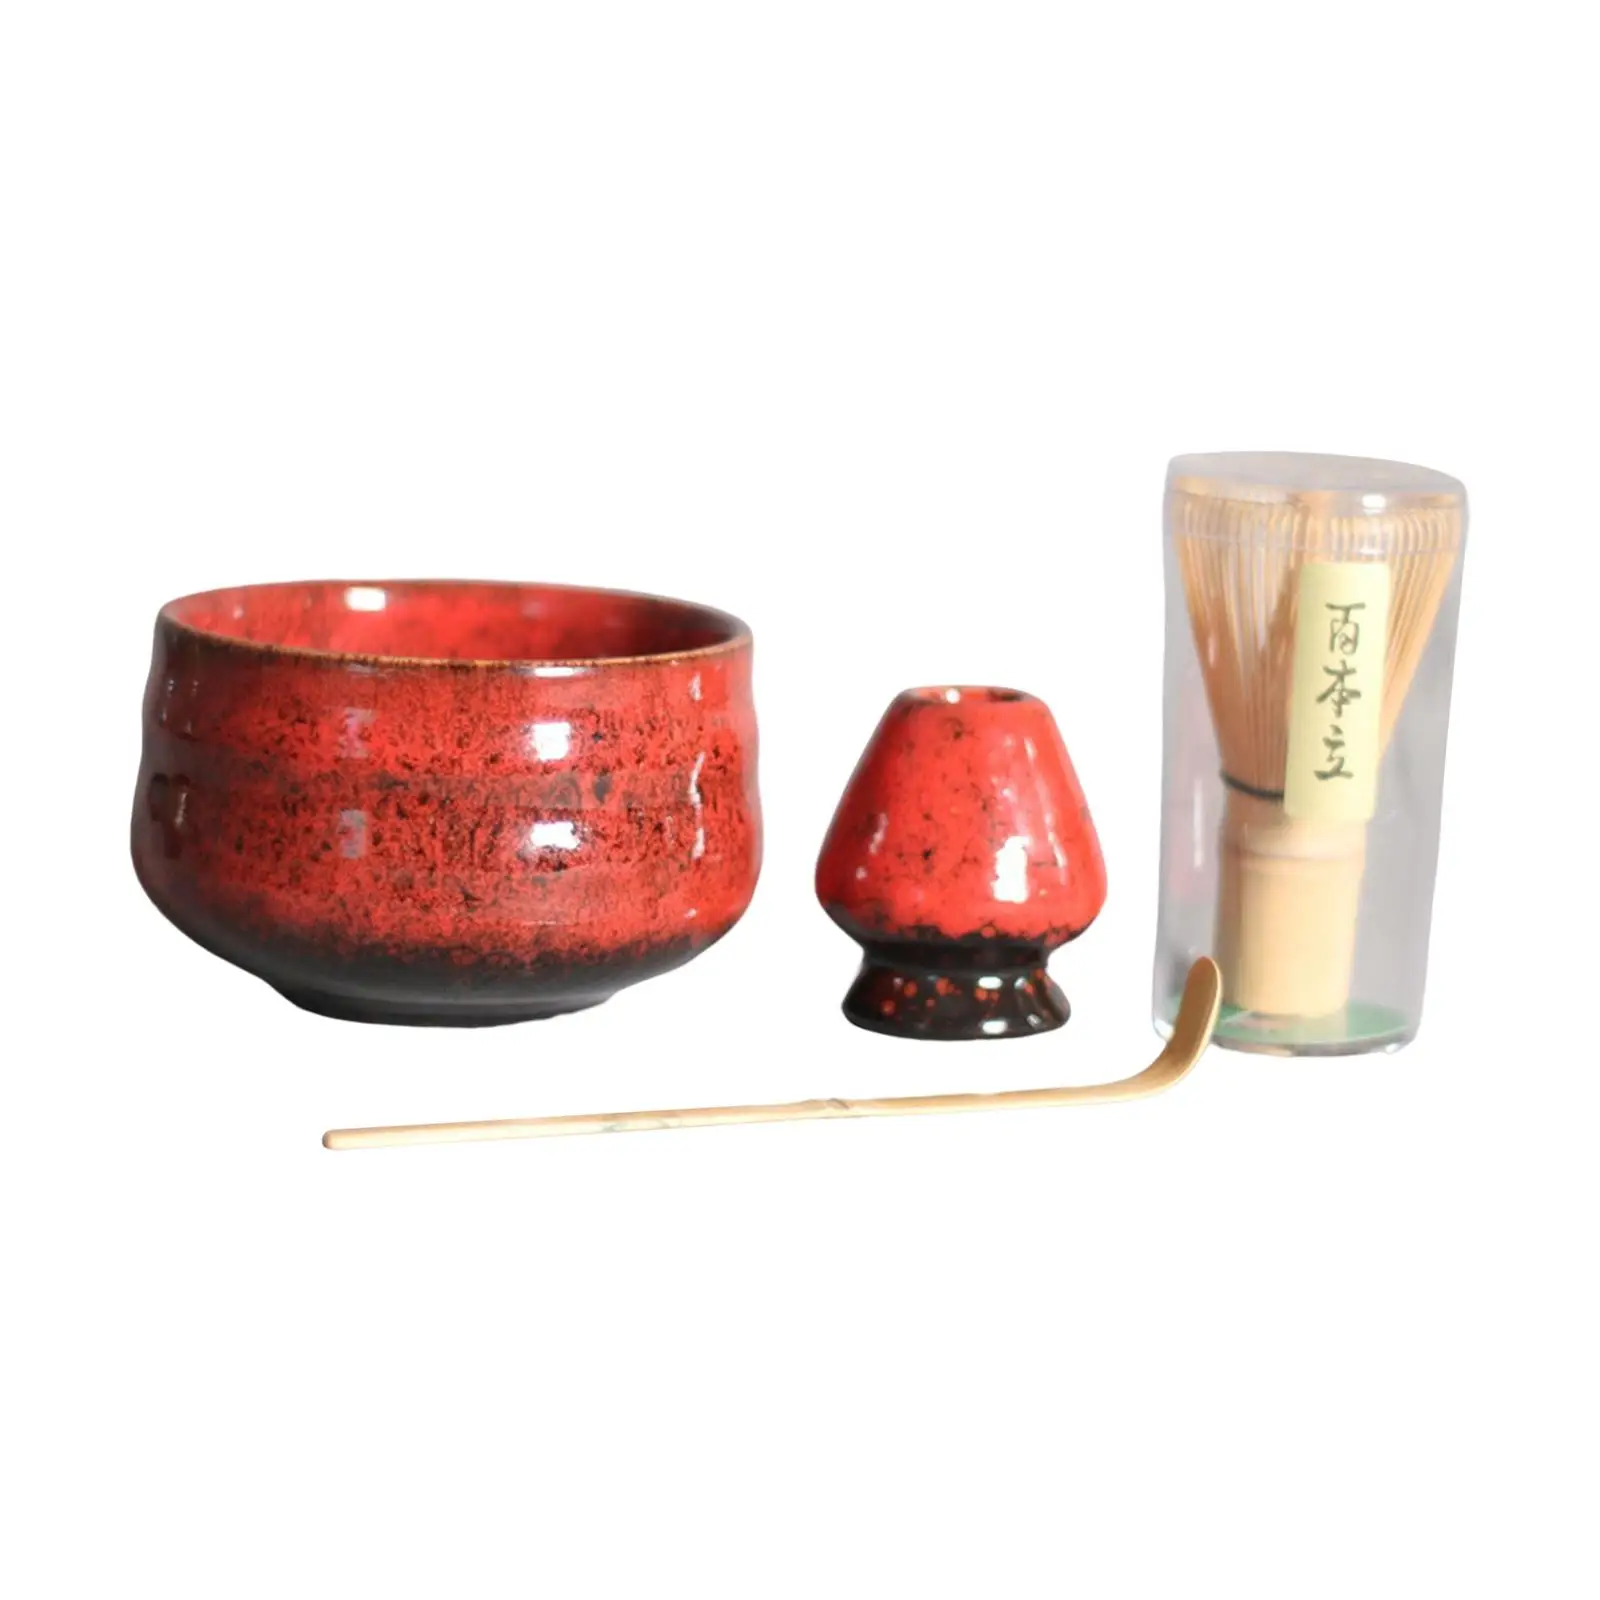 4x Matcha Set Traditional , Matcha Bowl, Whisk Holder, Traditional Japanese Tea Ceremony for Tea Room